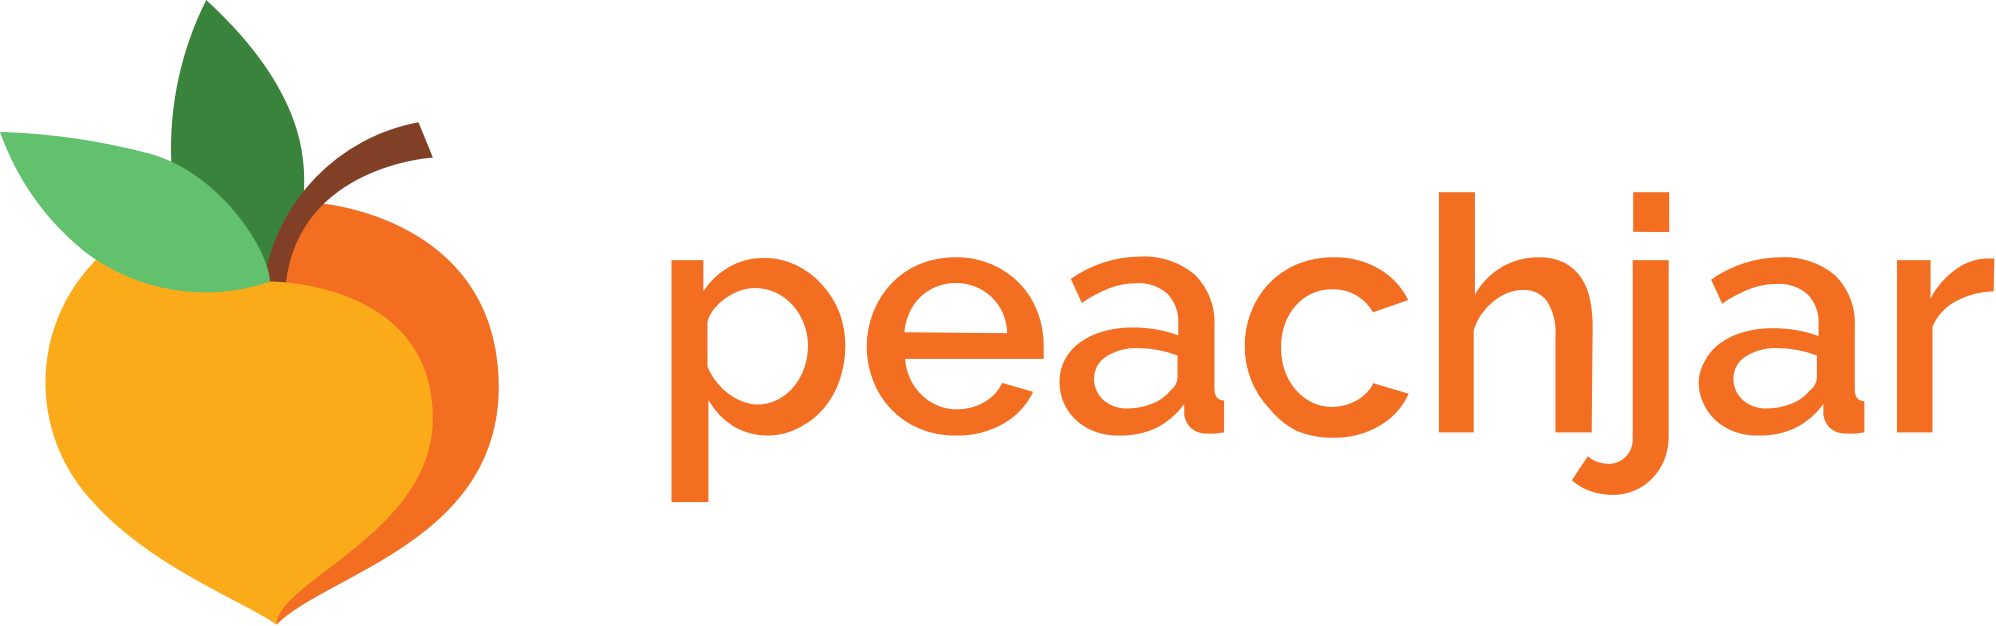 Peachjar Logo PNG